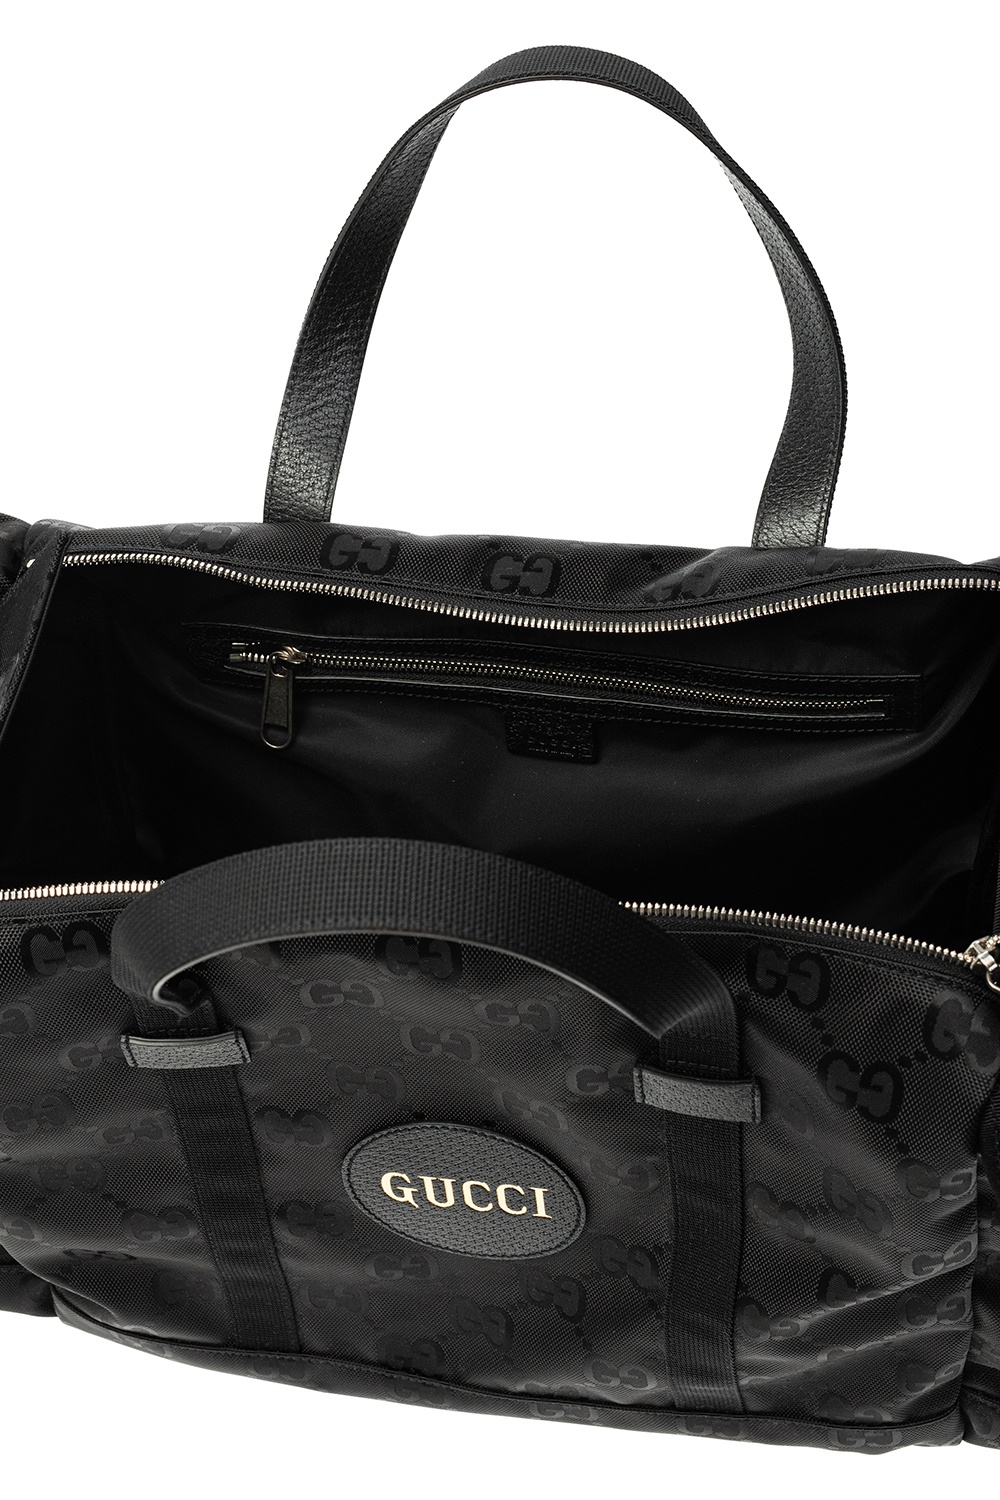 Gucci Duffel bag